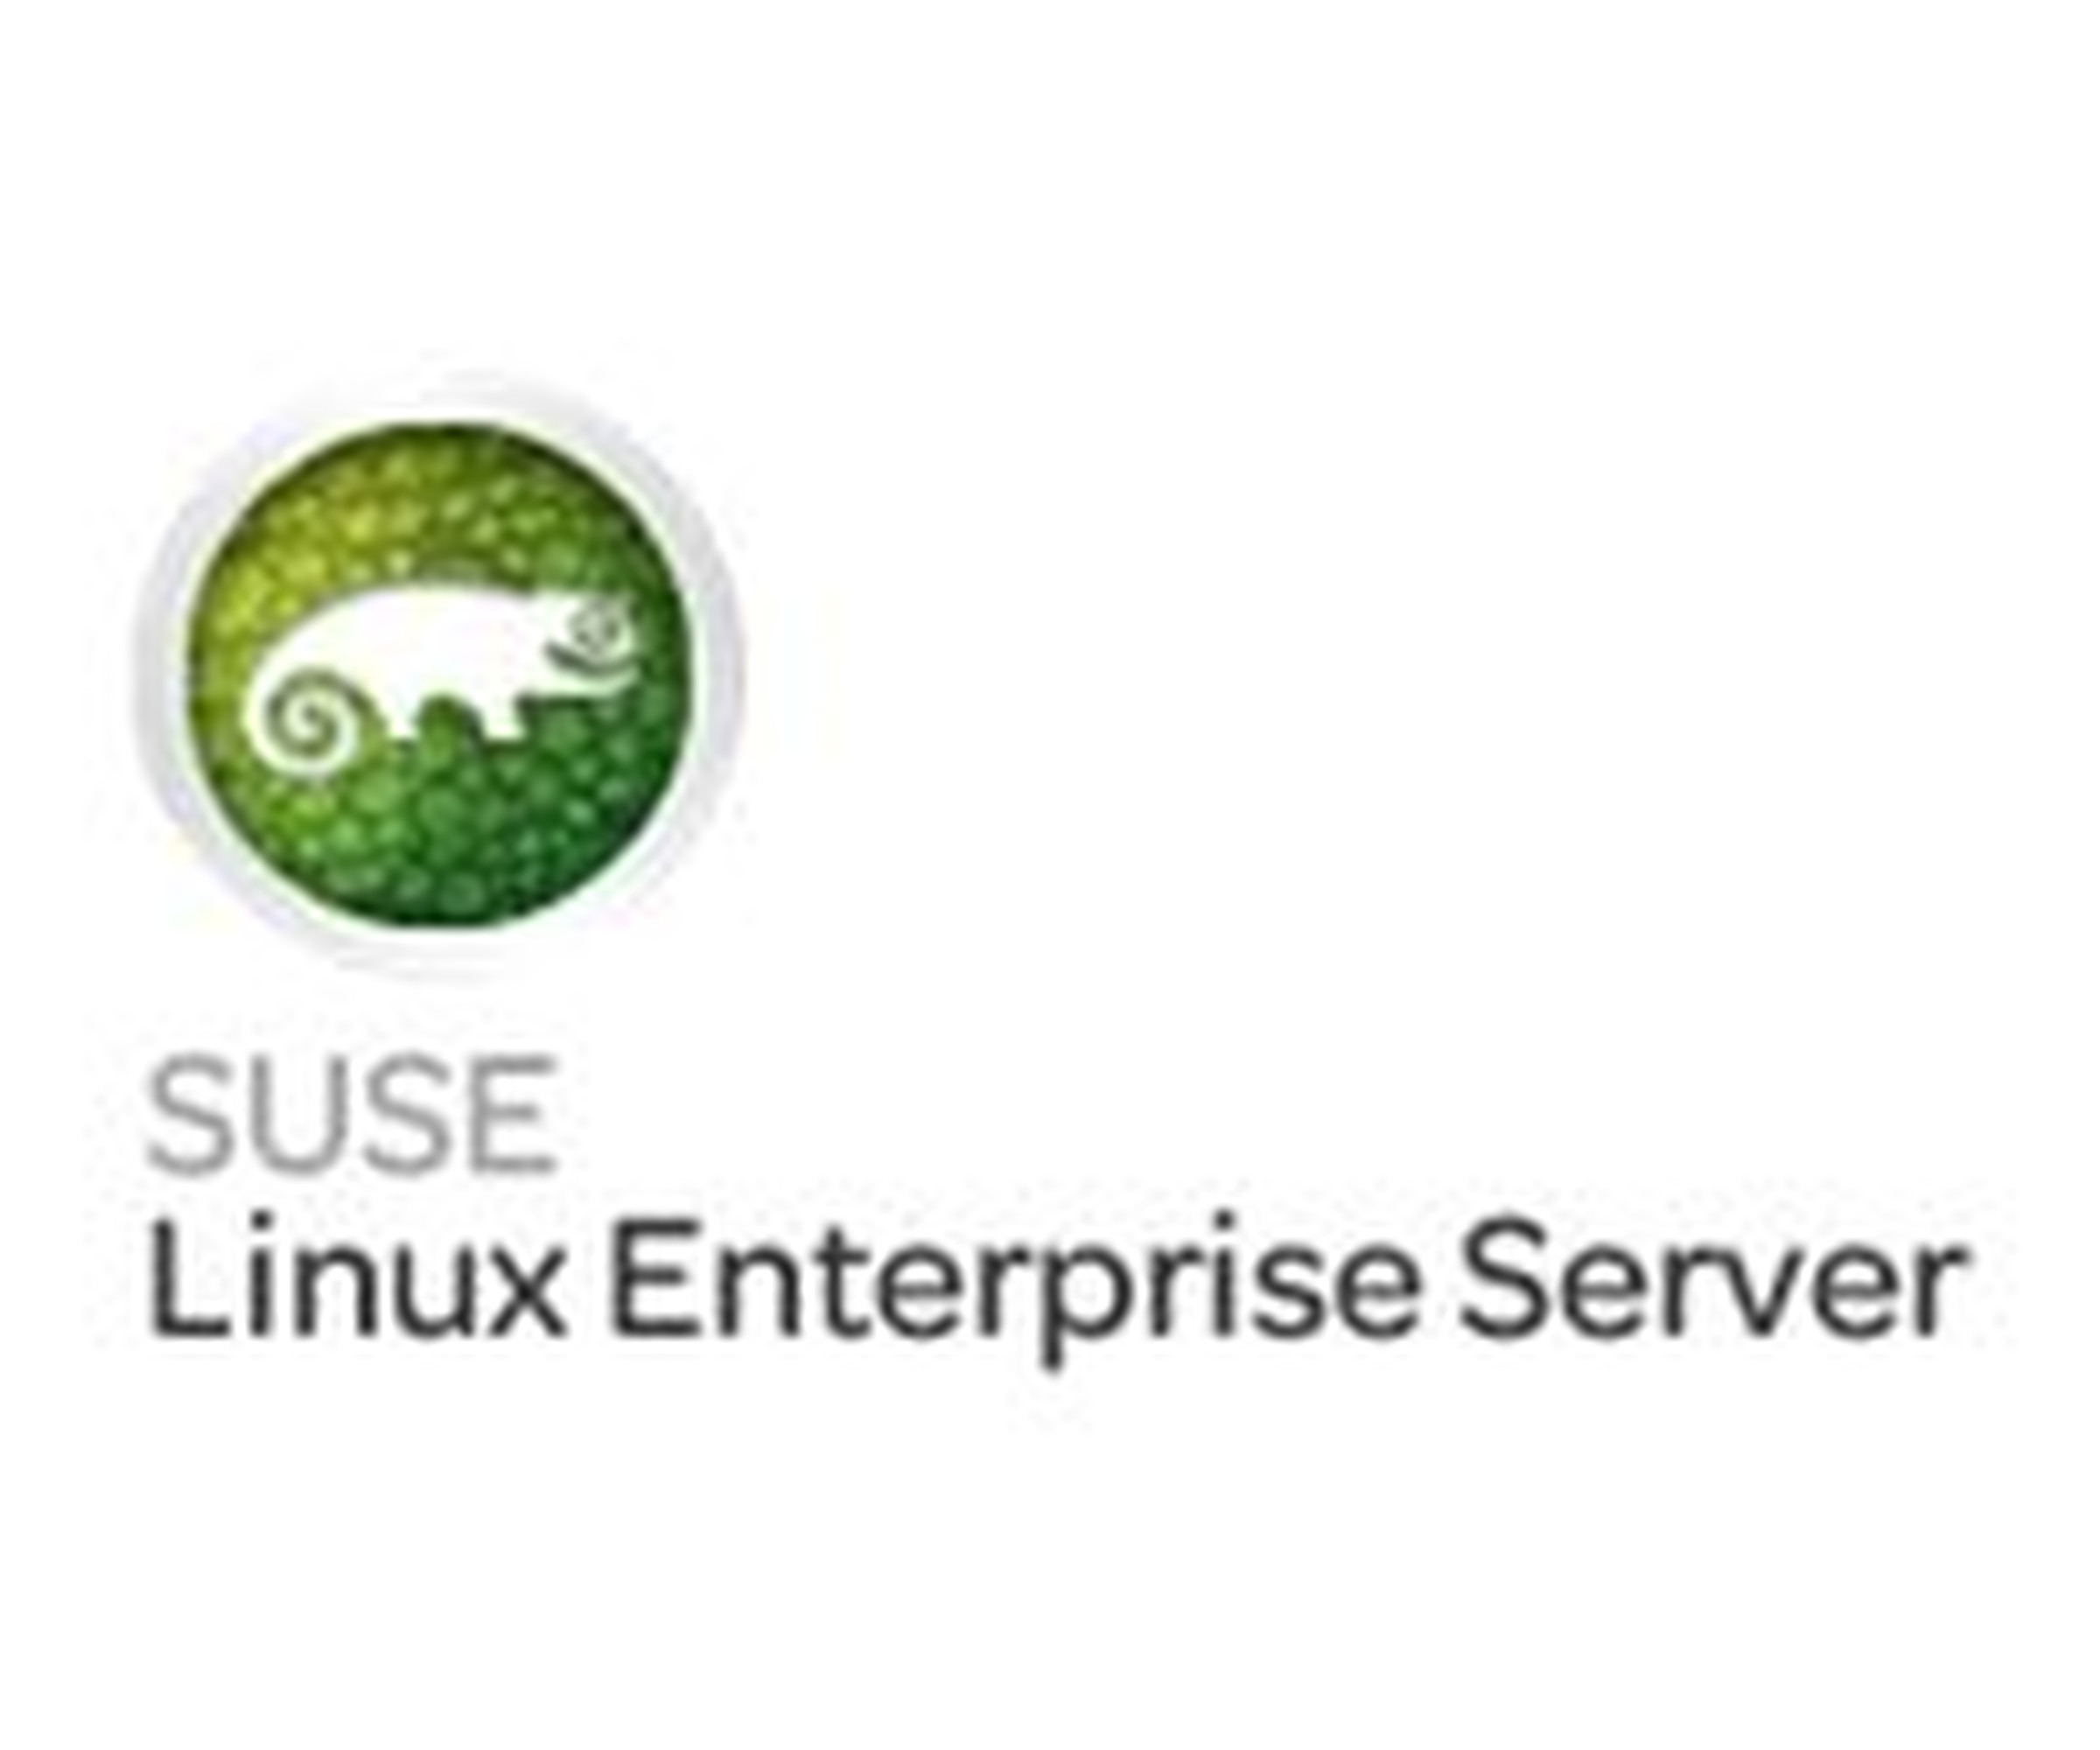 Suse linux enterprise server. SUSE Linux Enterprise Server (sles). SUSE SCA_sles15 SUSE certified Administrator. Econel логотип.